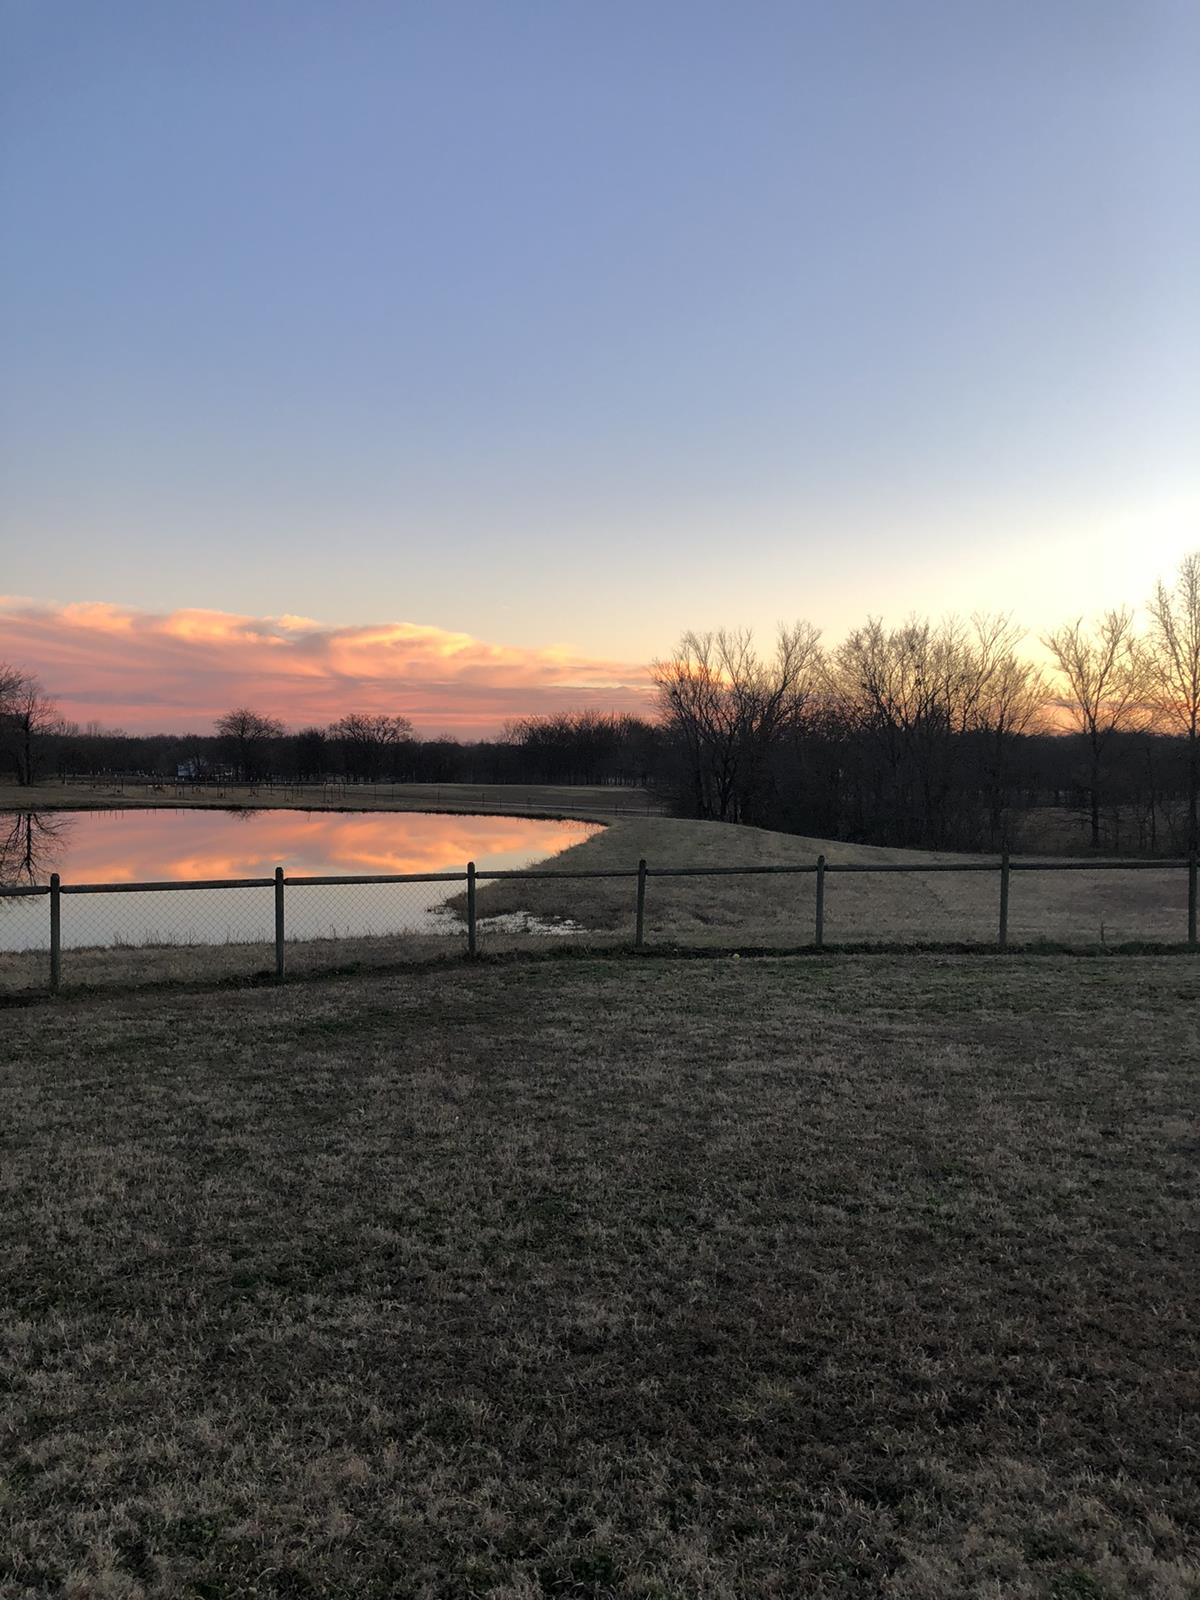 sunset over pond